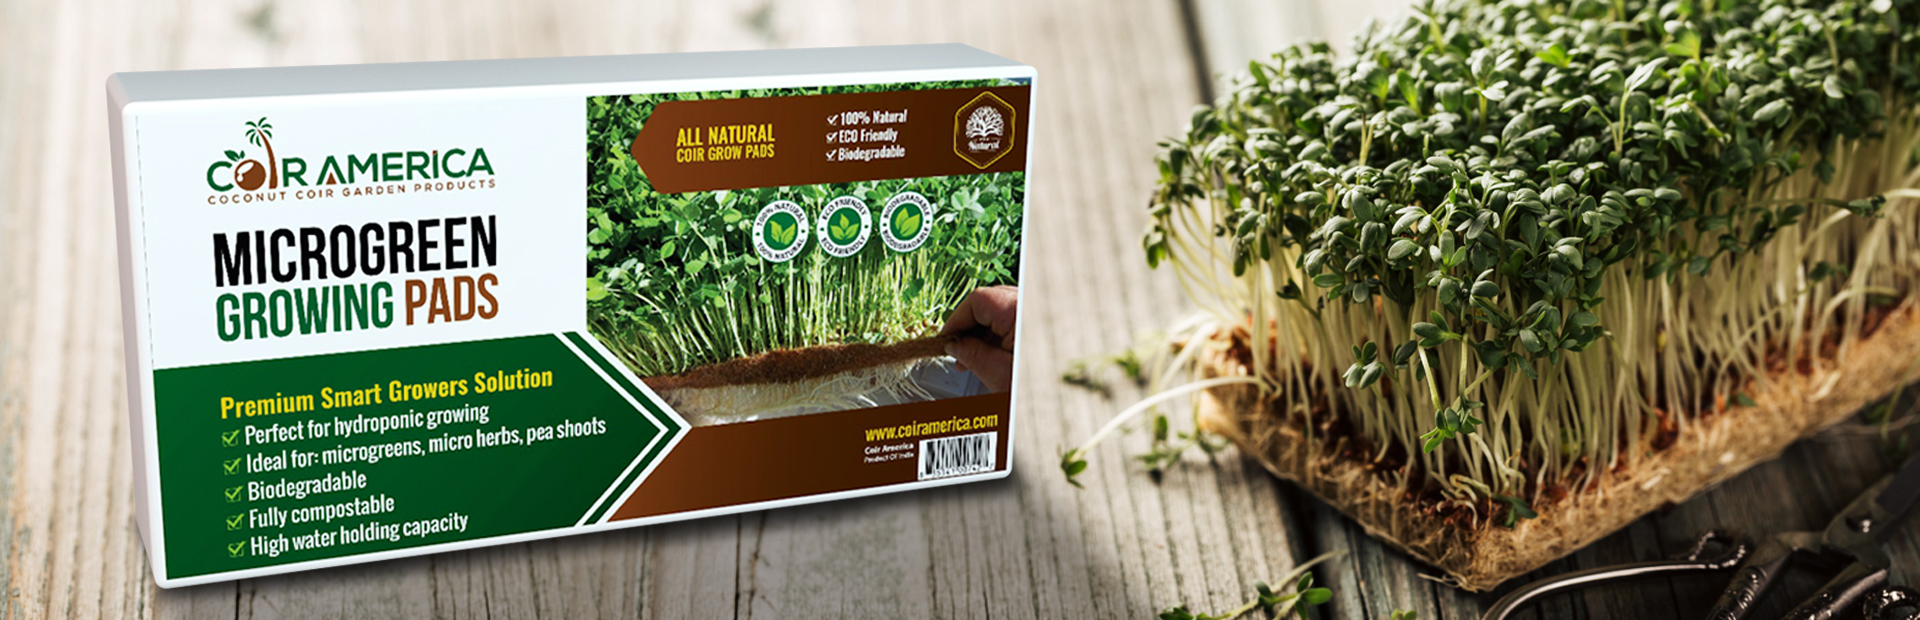 All Natural Microgreen Coir Grow Pads